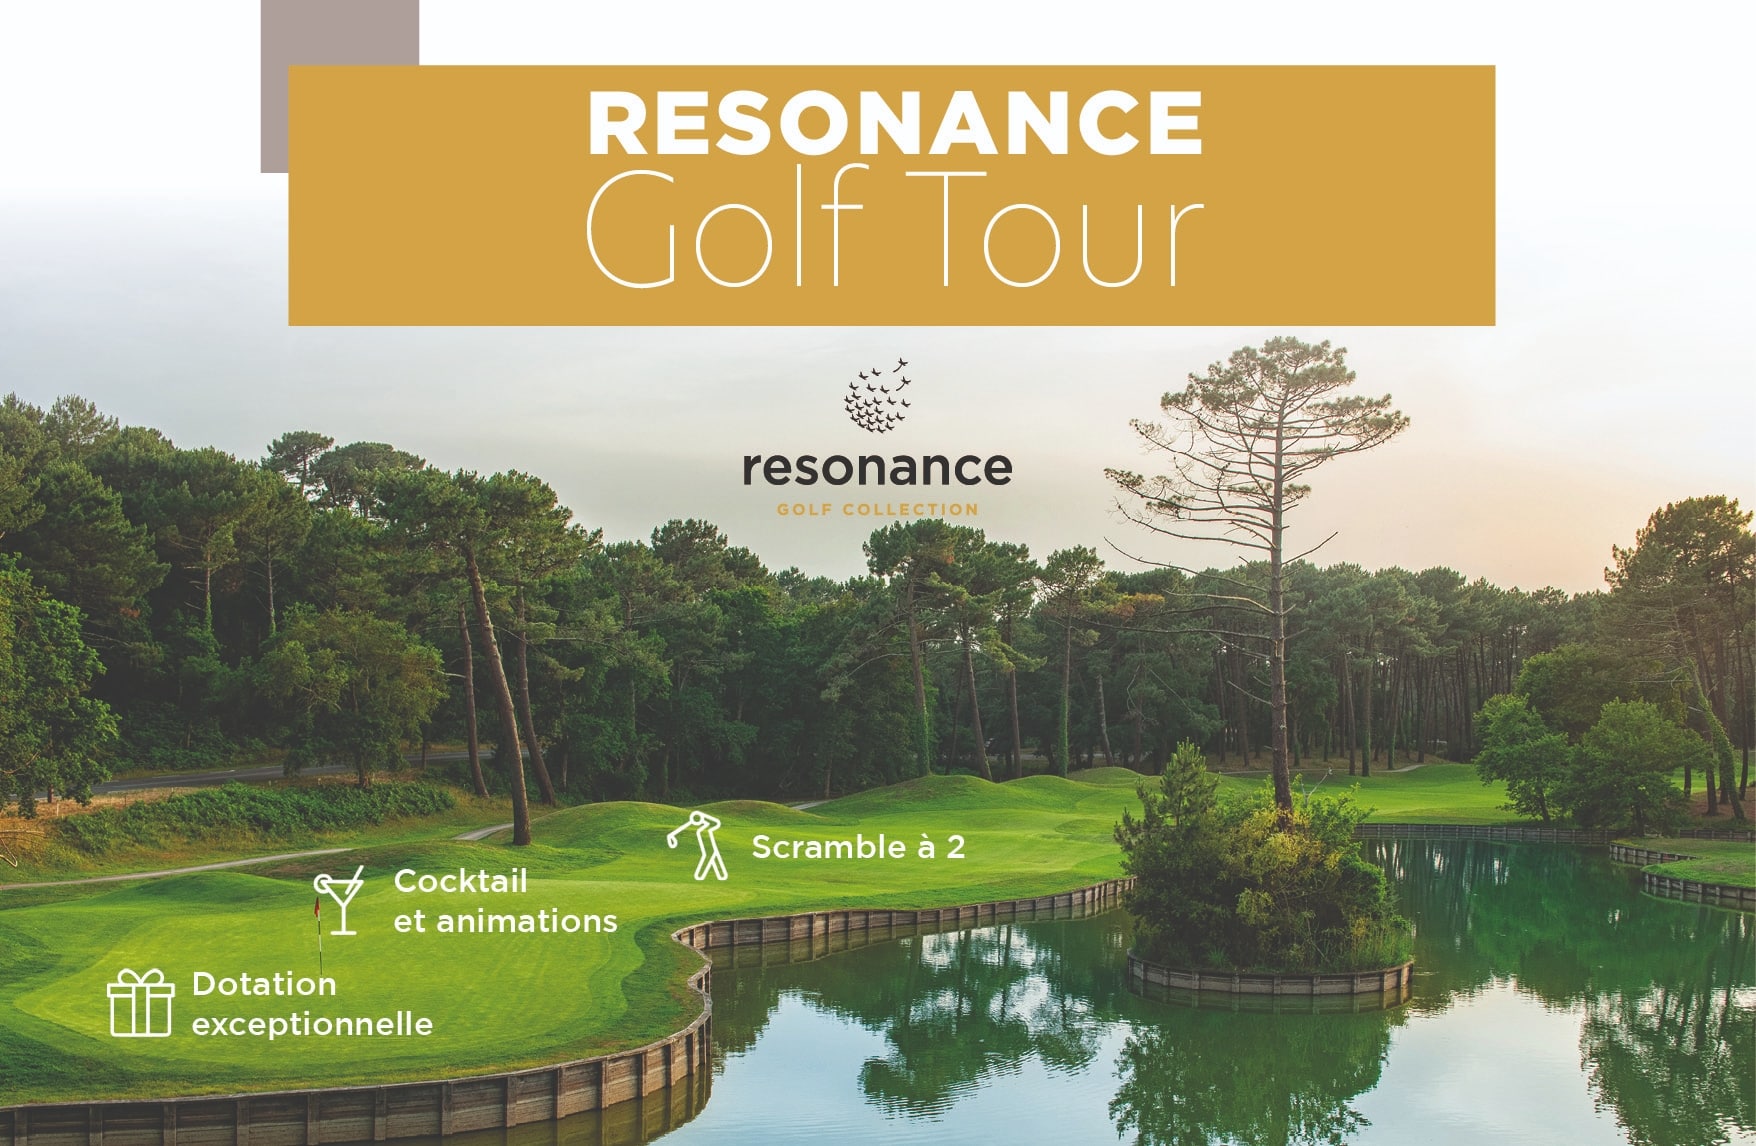 Resonance Golf Tour_ edition 2023 - resonance golf collection